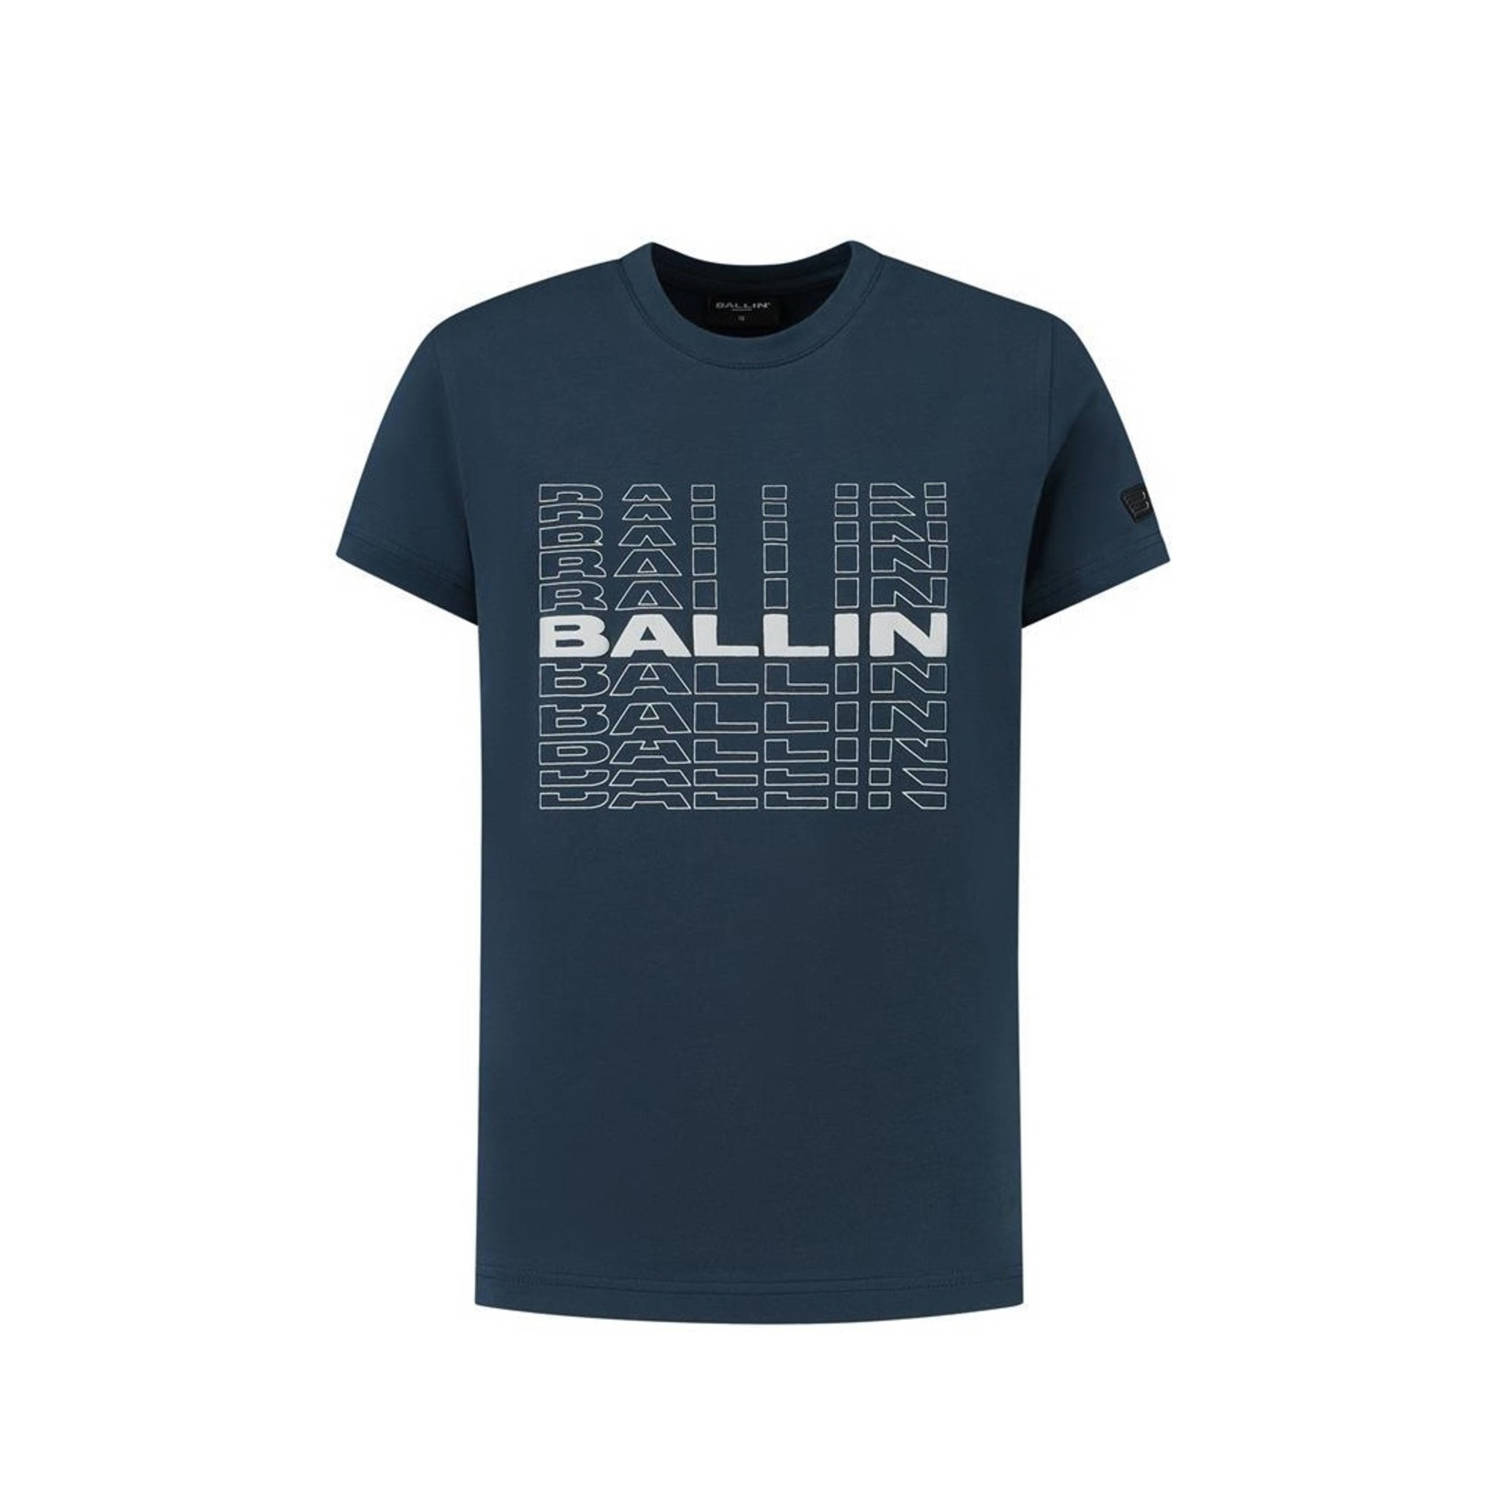 Ballin T-shirt met printopdruk donkerblauw